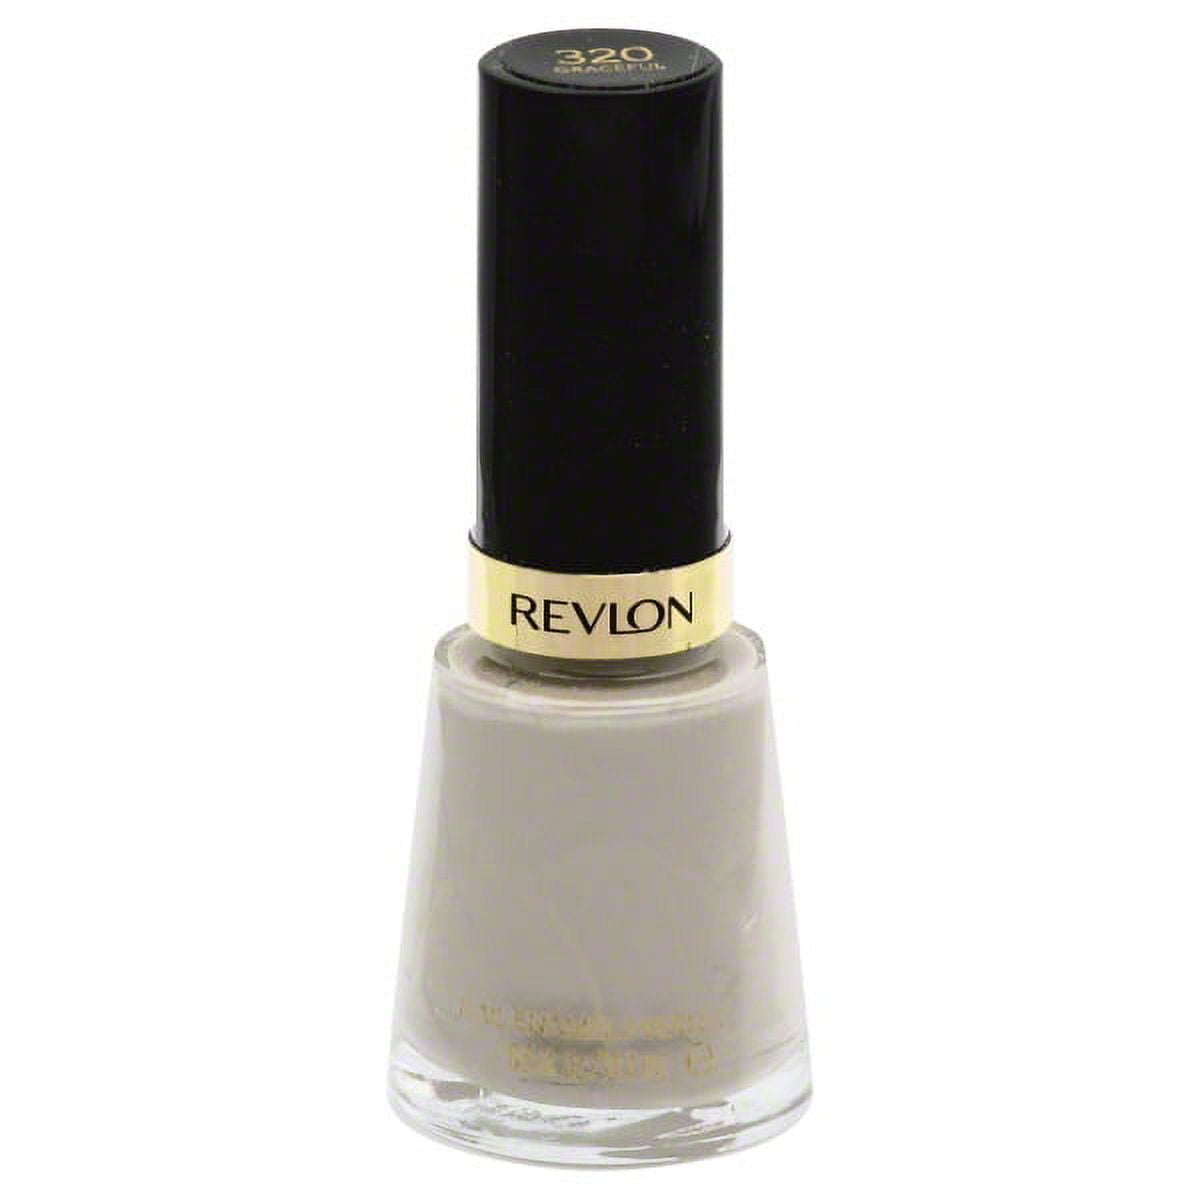 Revlon Assorted Nail Polish Your Choice of Color -140: Fall Mood - Nail  Polish | Facebook Marketplace | Facebook